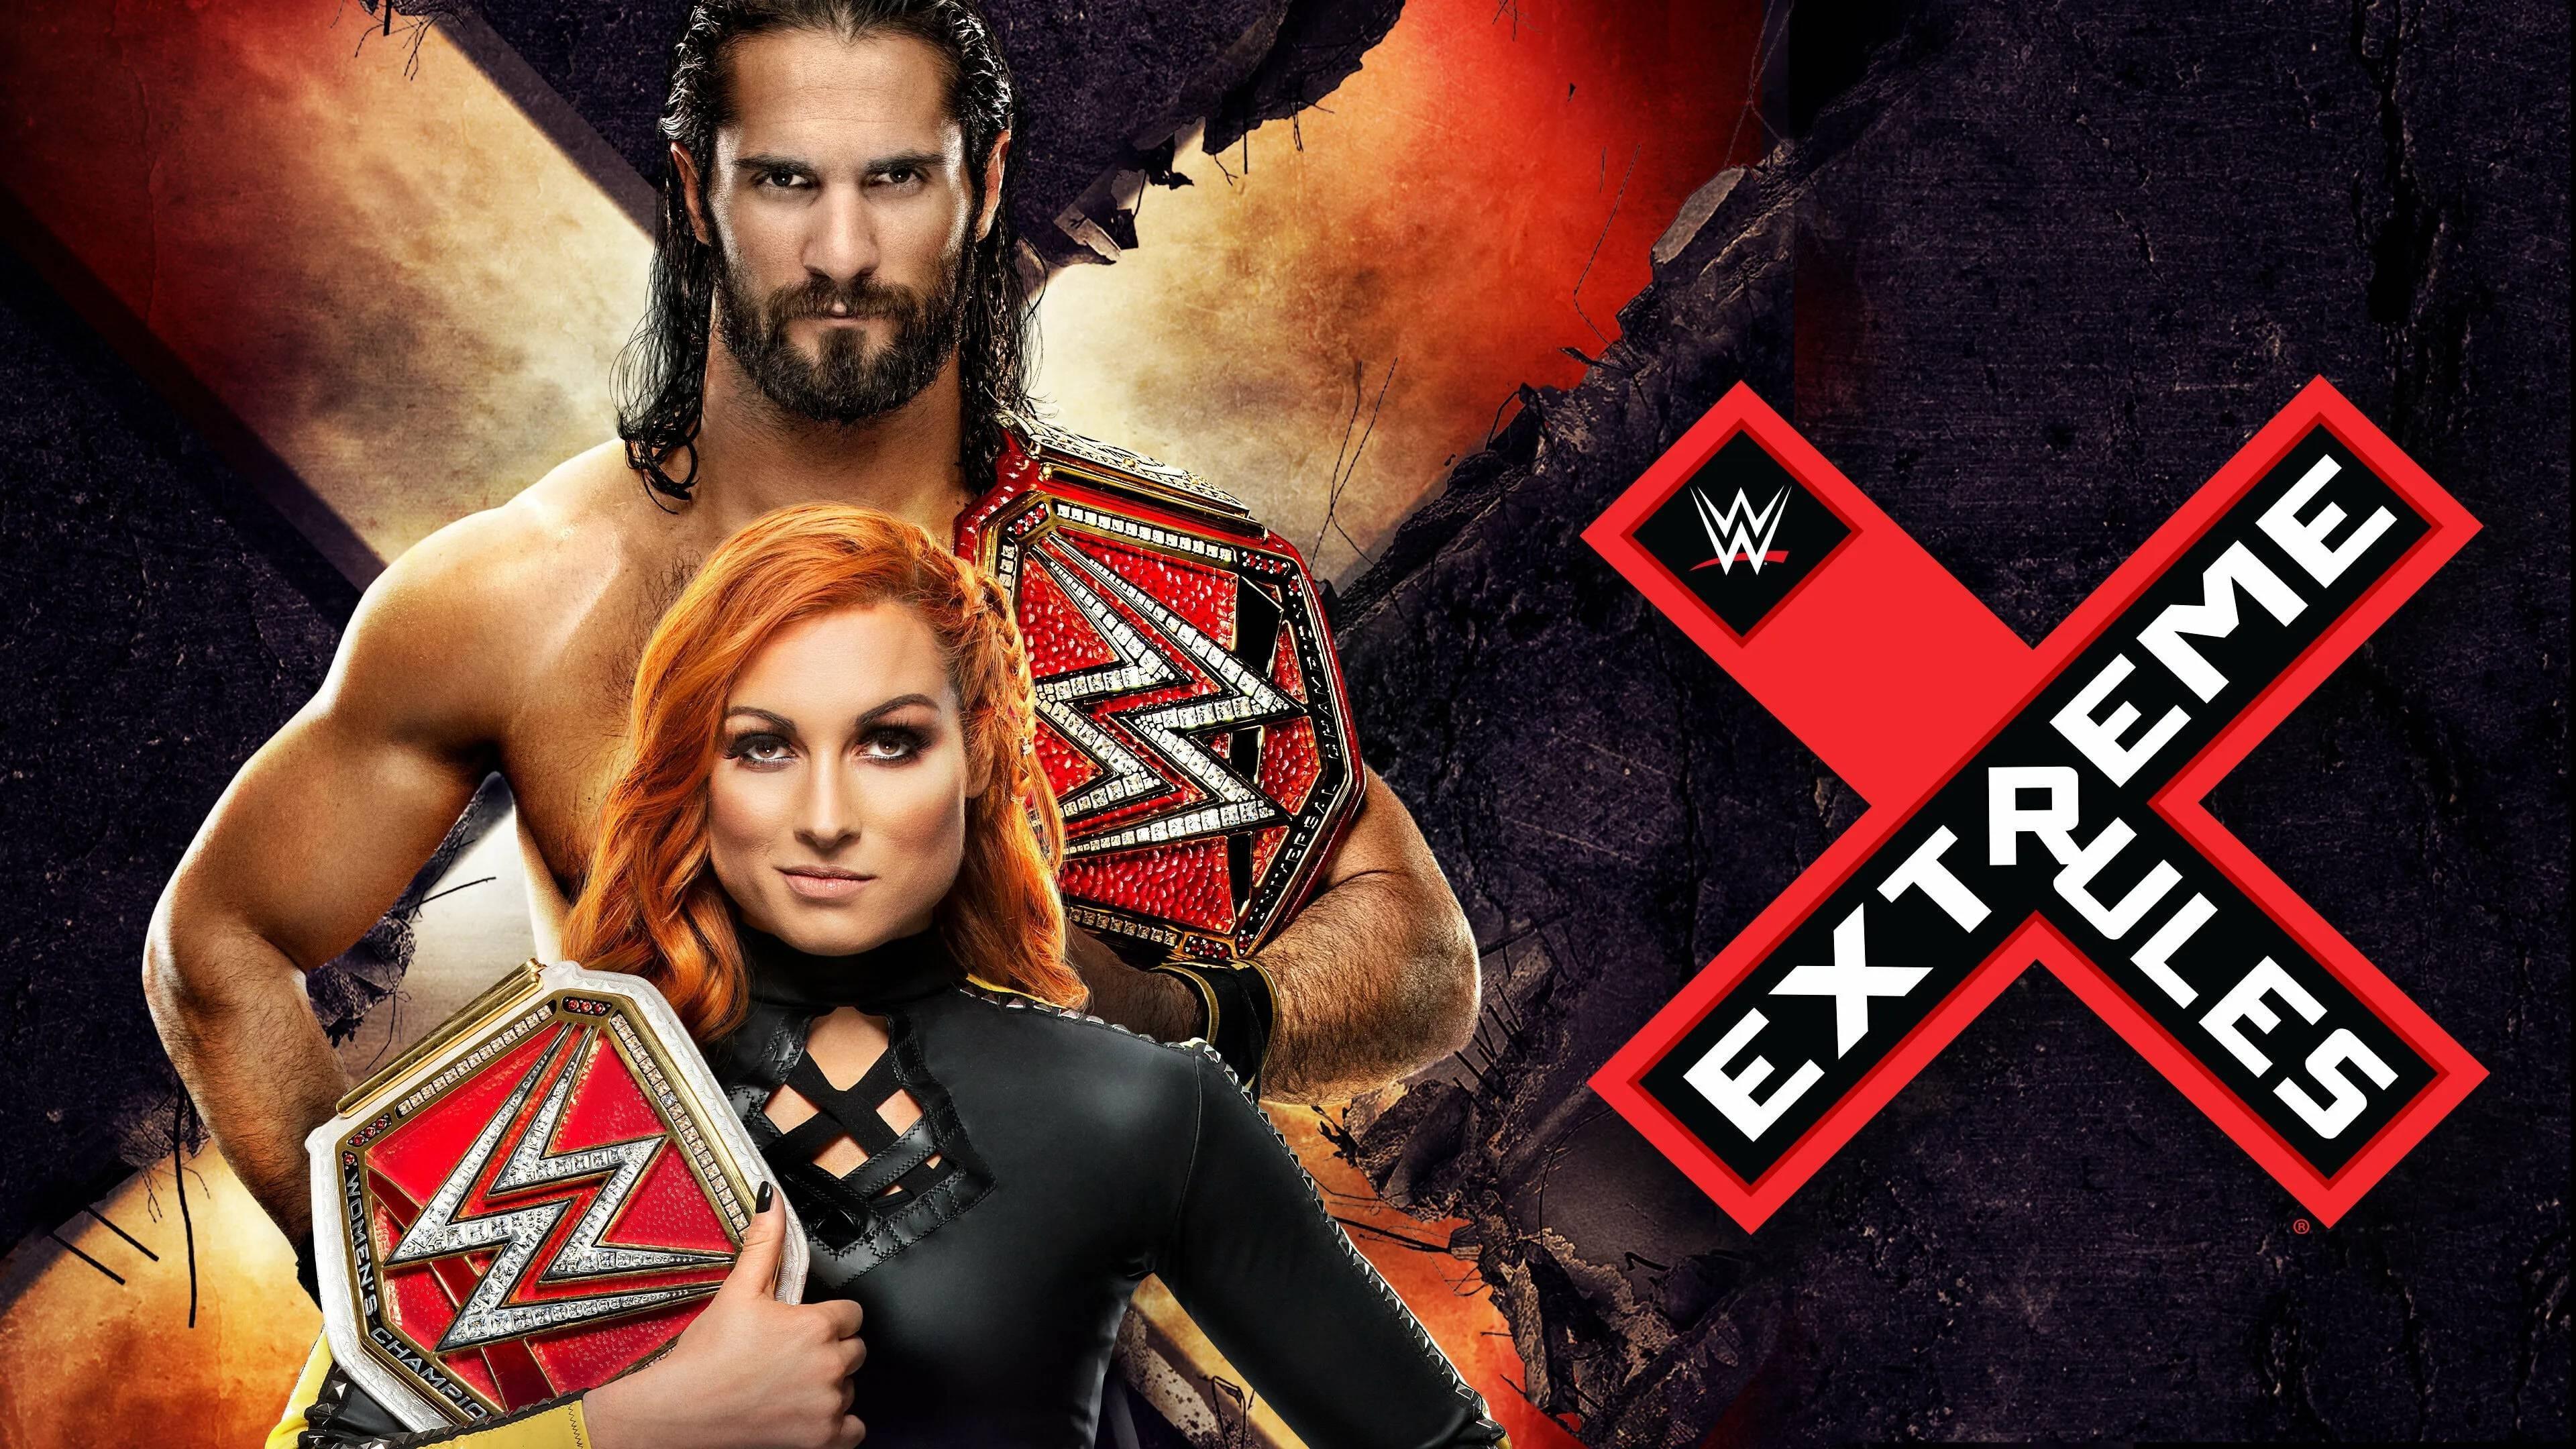 WWE Extreme Rules 2019 backdrop